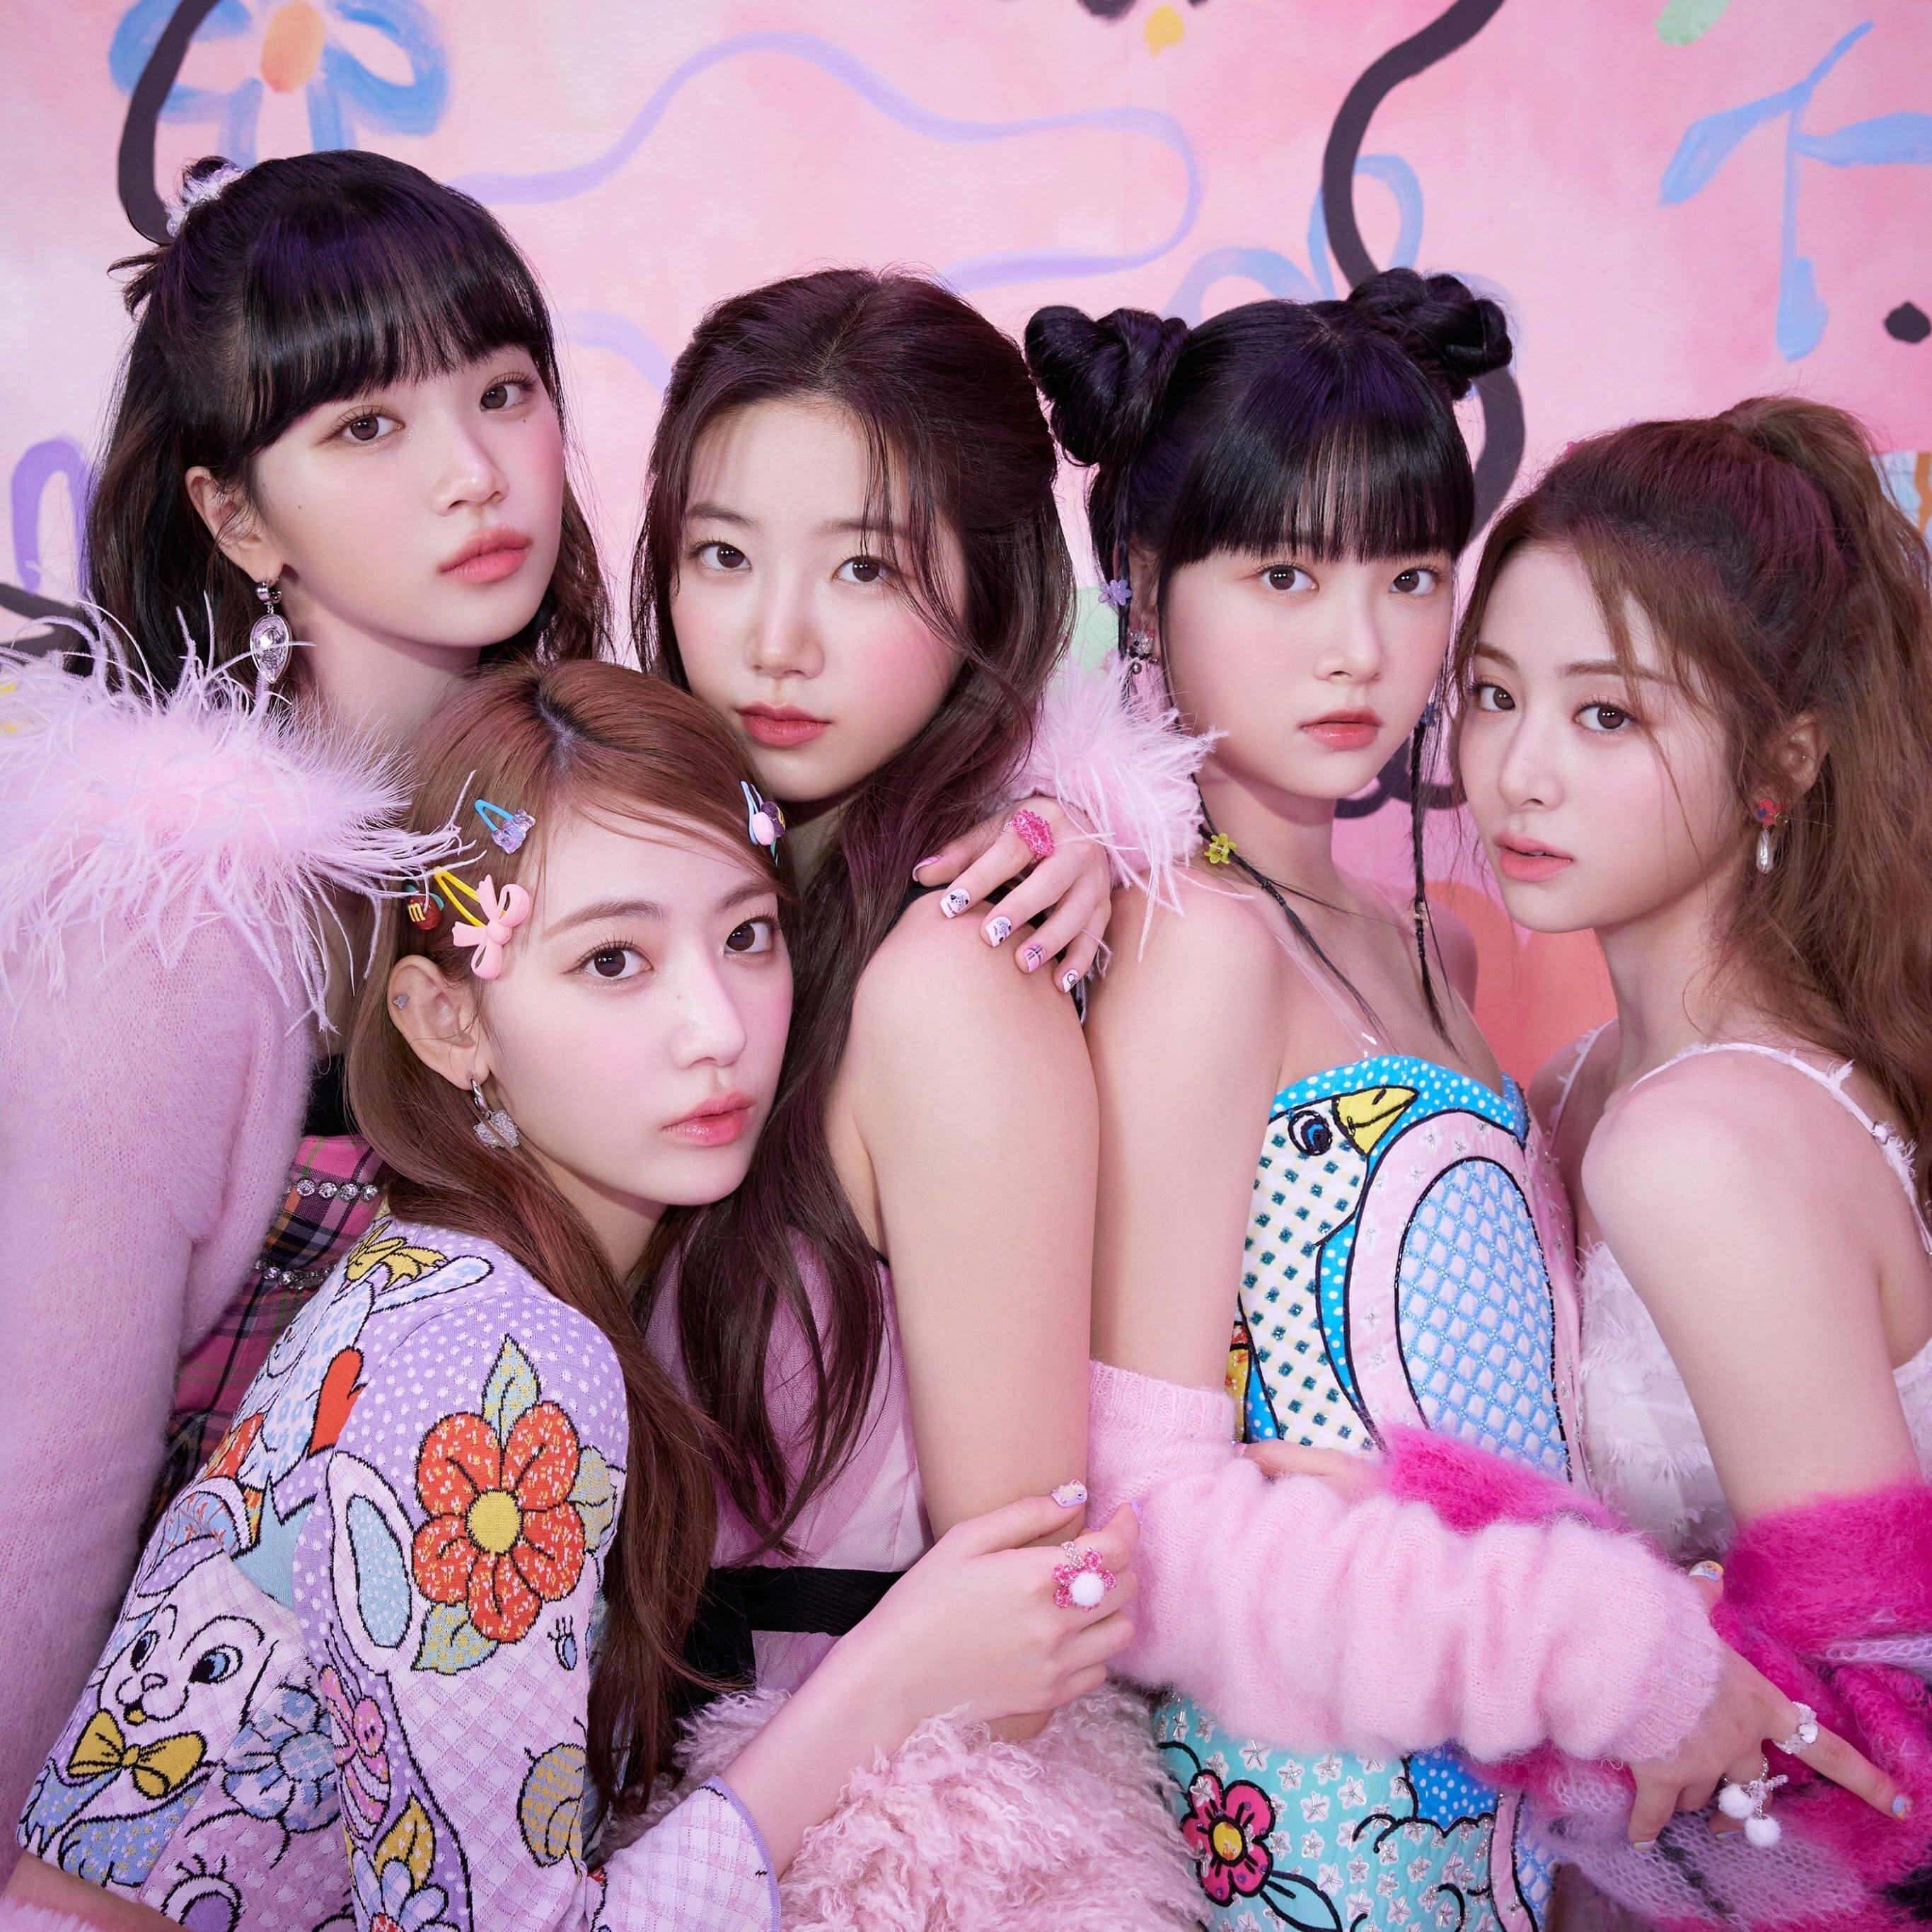 Le sserafim japanese single album FEARLESS image teaser (pink)